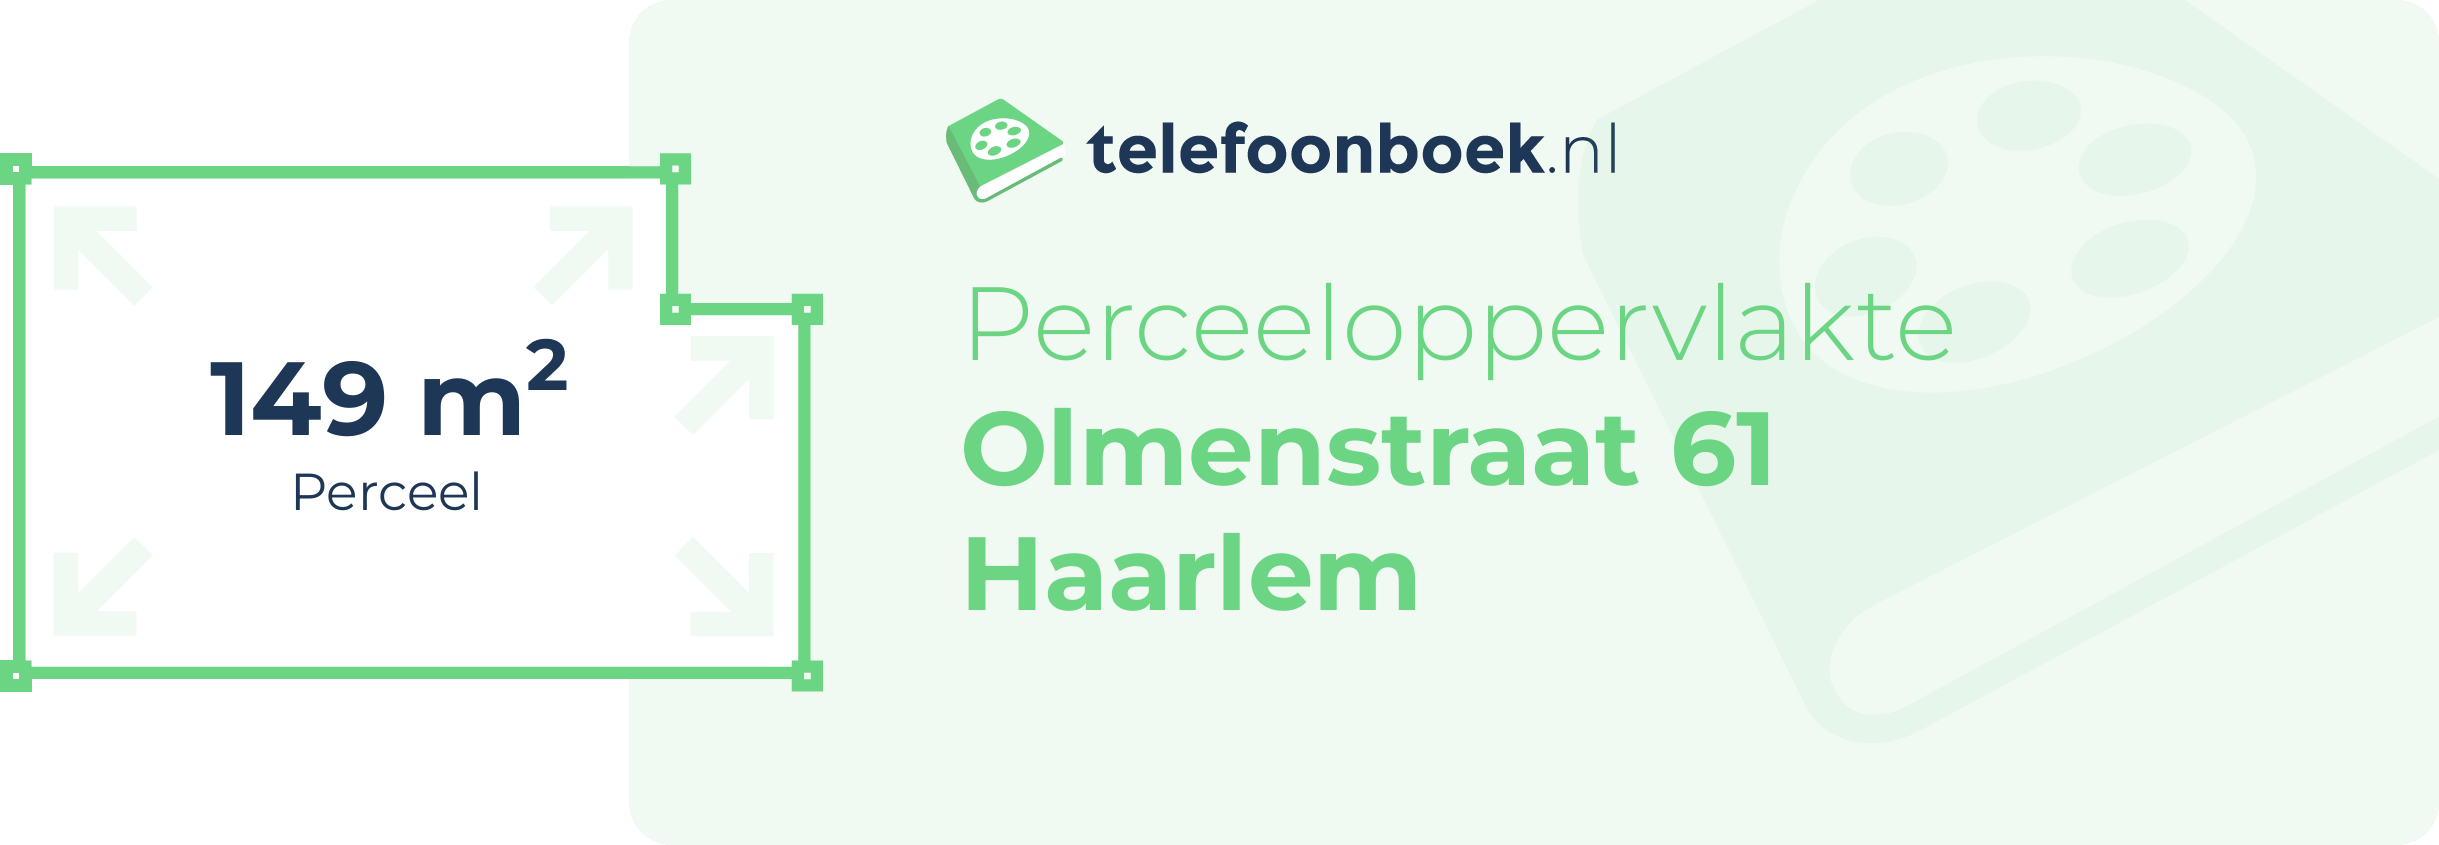 Perceeloppervlakte Olmenstraat 61 Haarlem